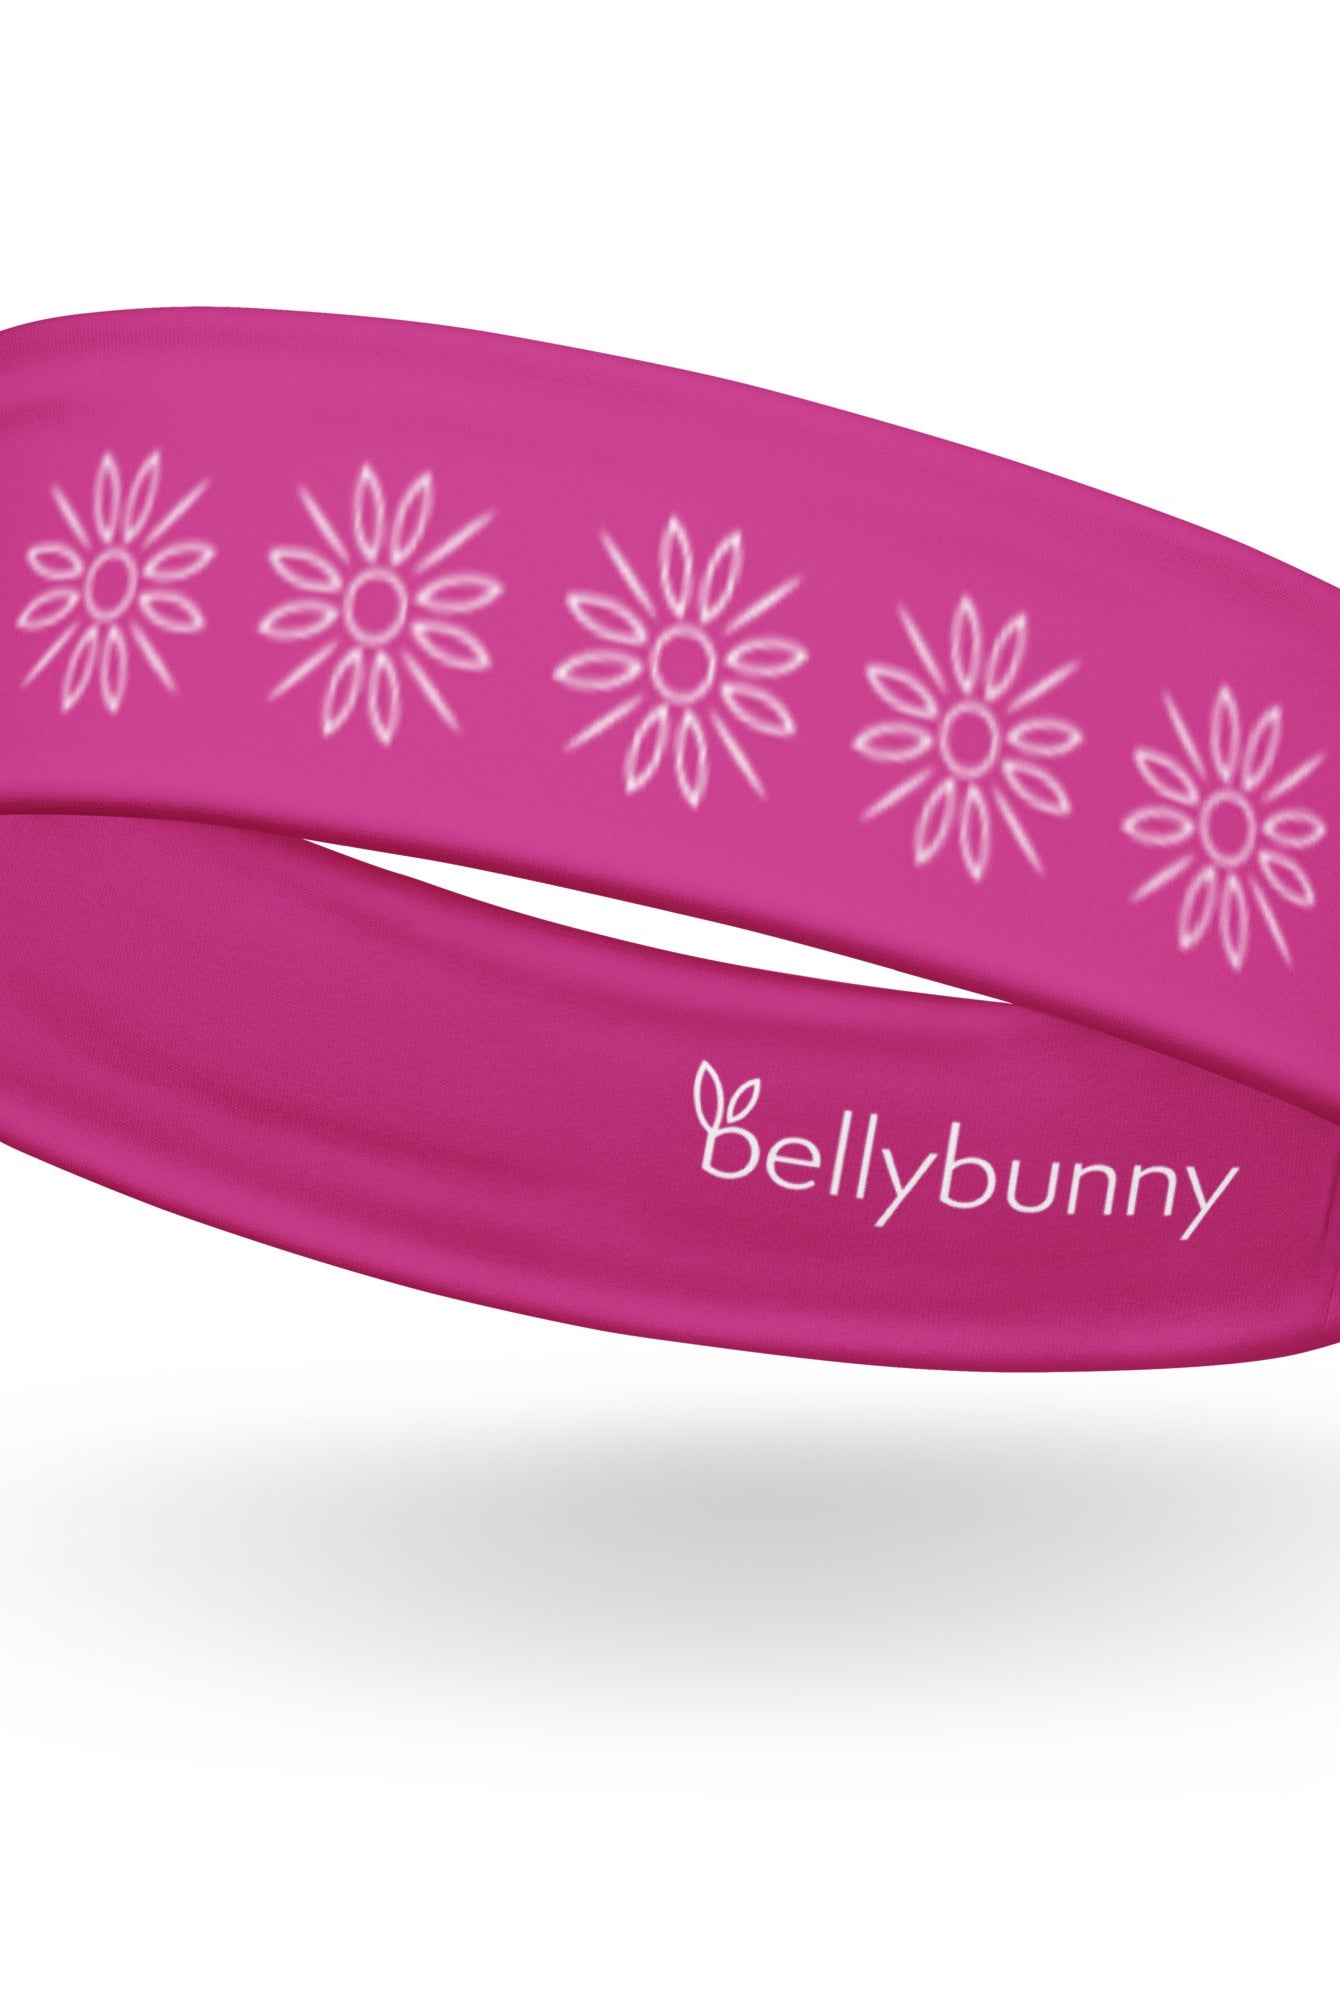 Bellybunny-Headband-